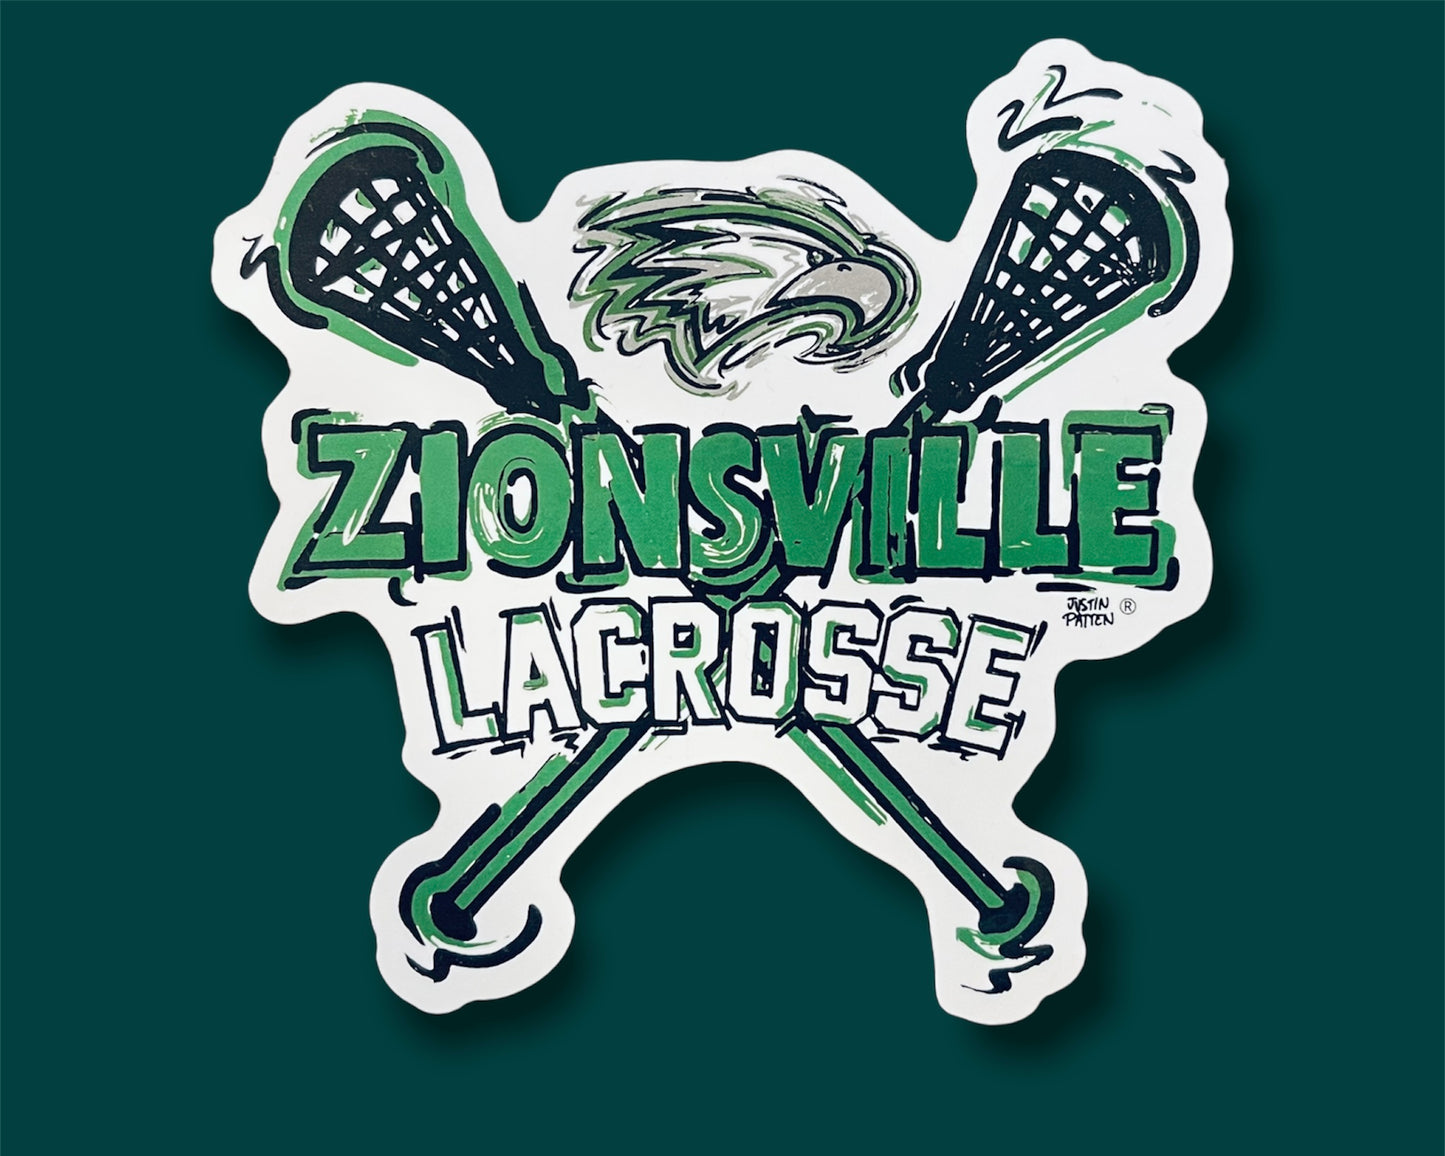 Zionsville Indiana Lacrosse Sticker by Justin Patten